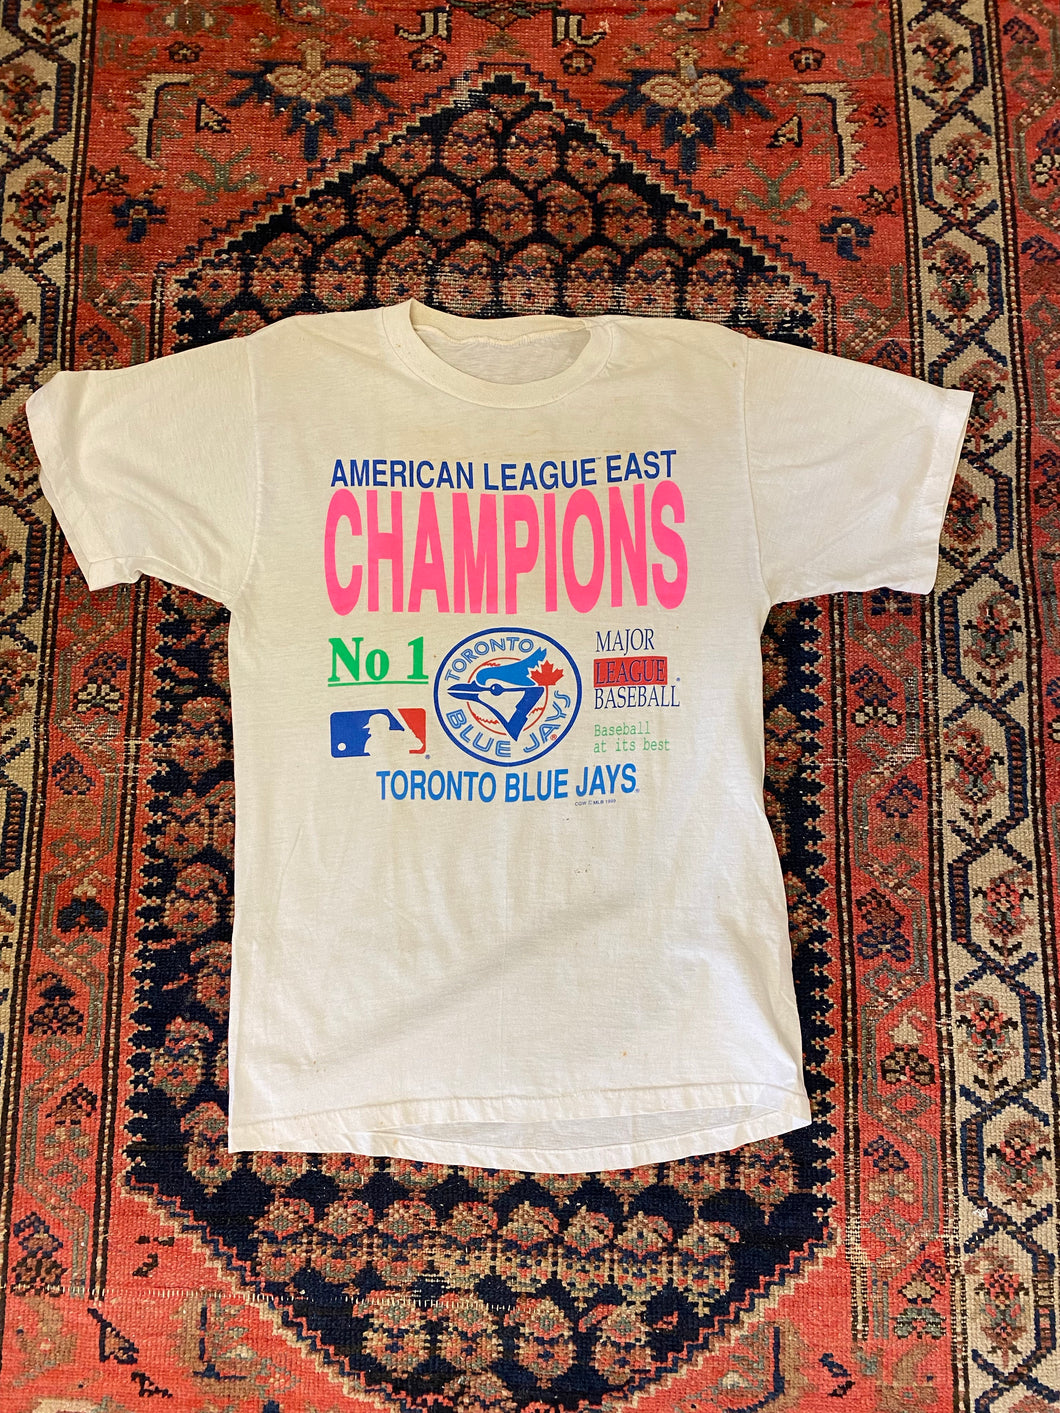 1989 Toronto Blue Jays T Shirt - S